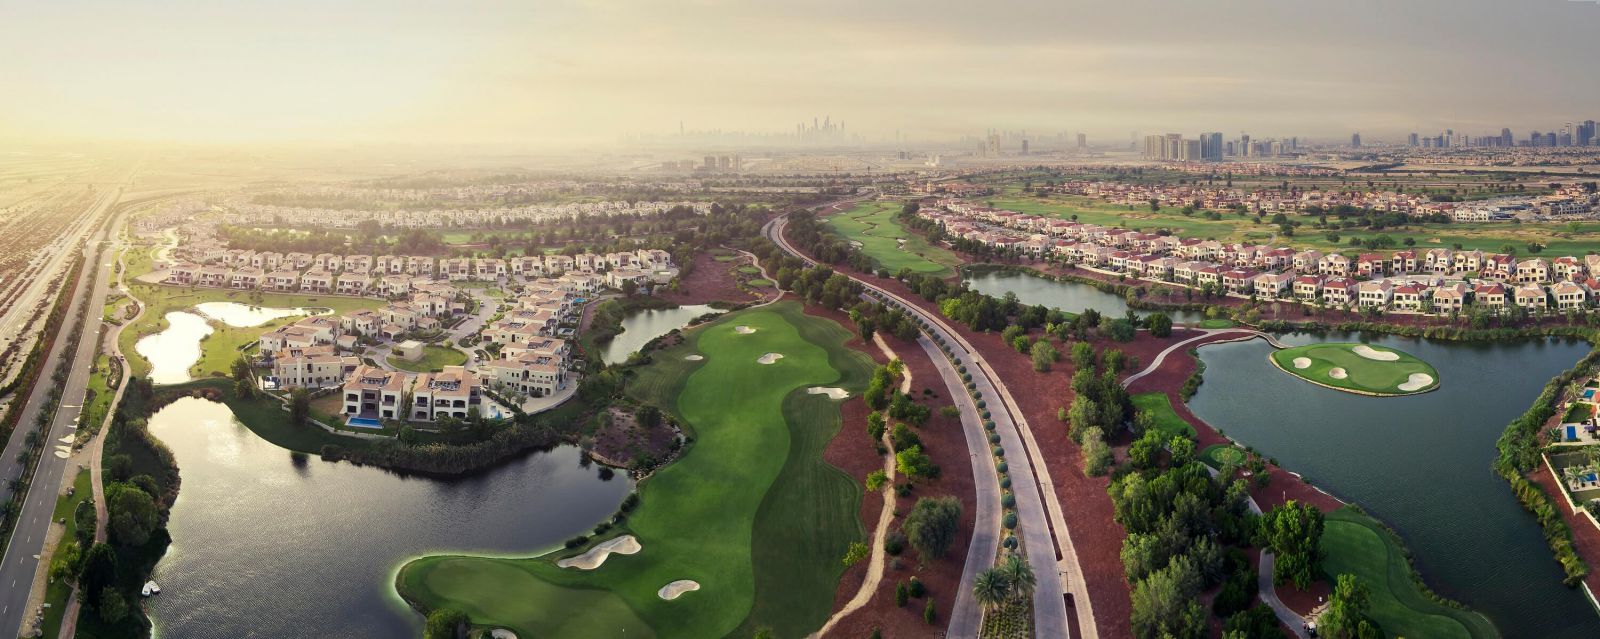 Jumeirah Golf Estates recognized as Best Residential & Leisure Destination 2017